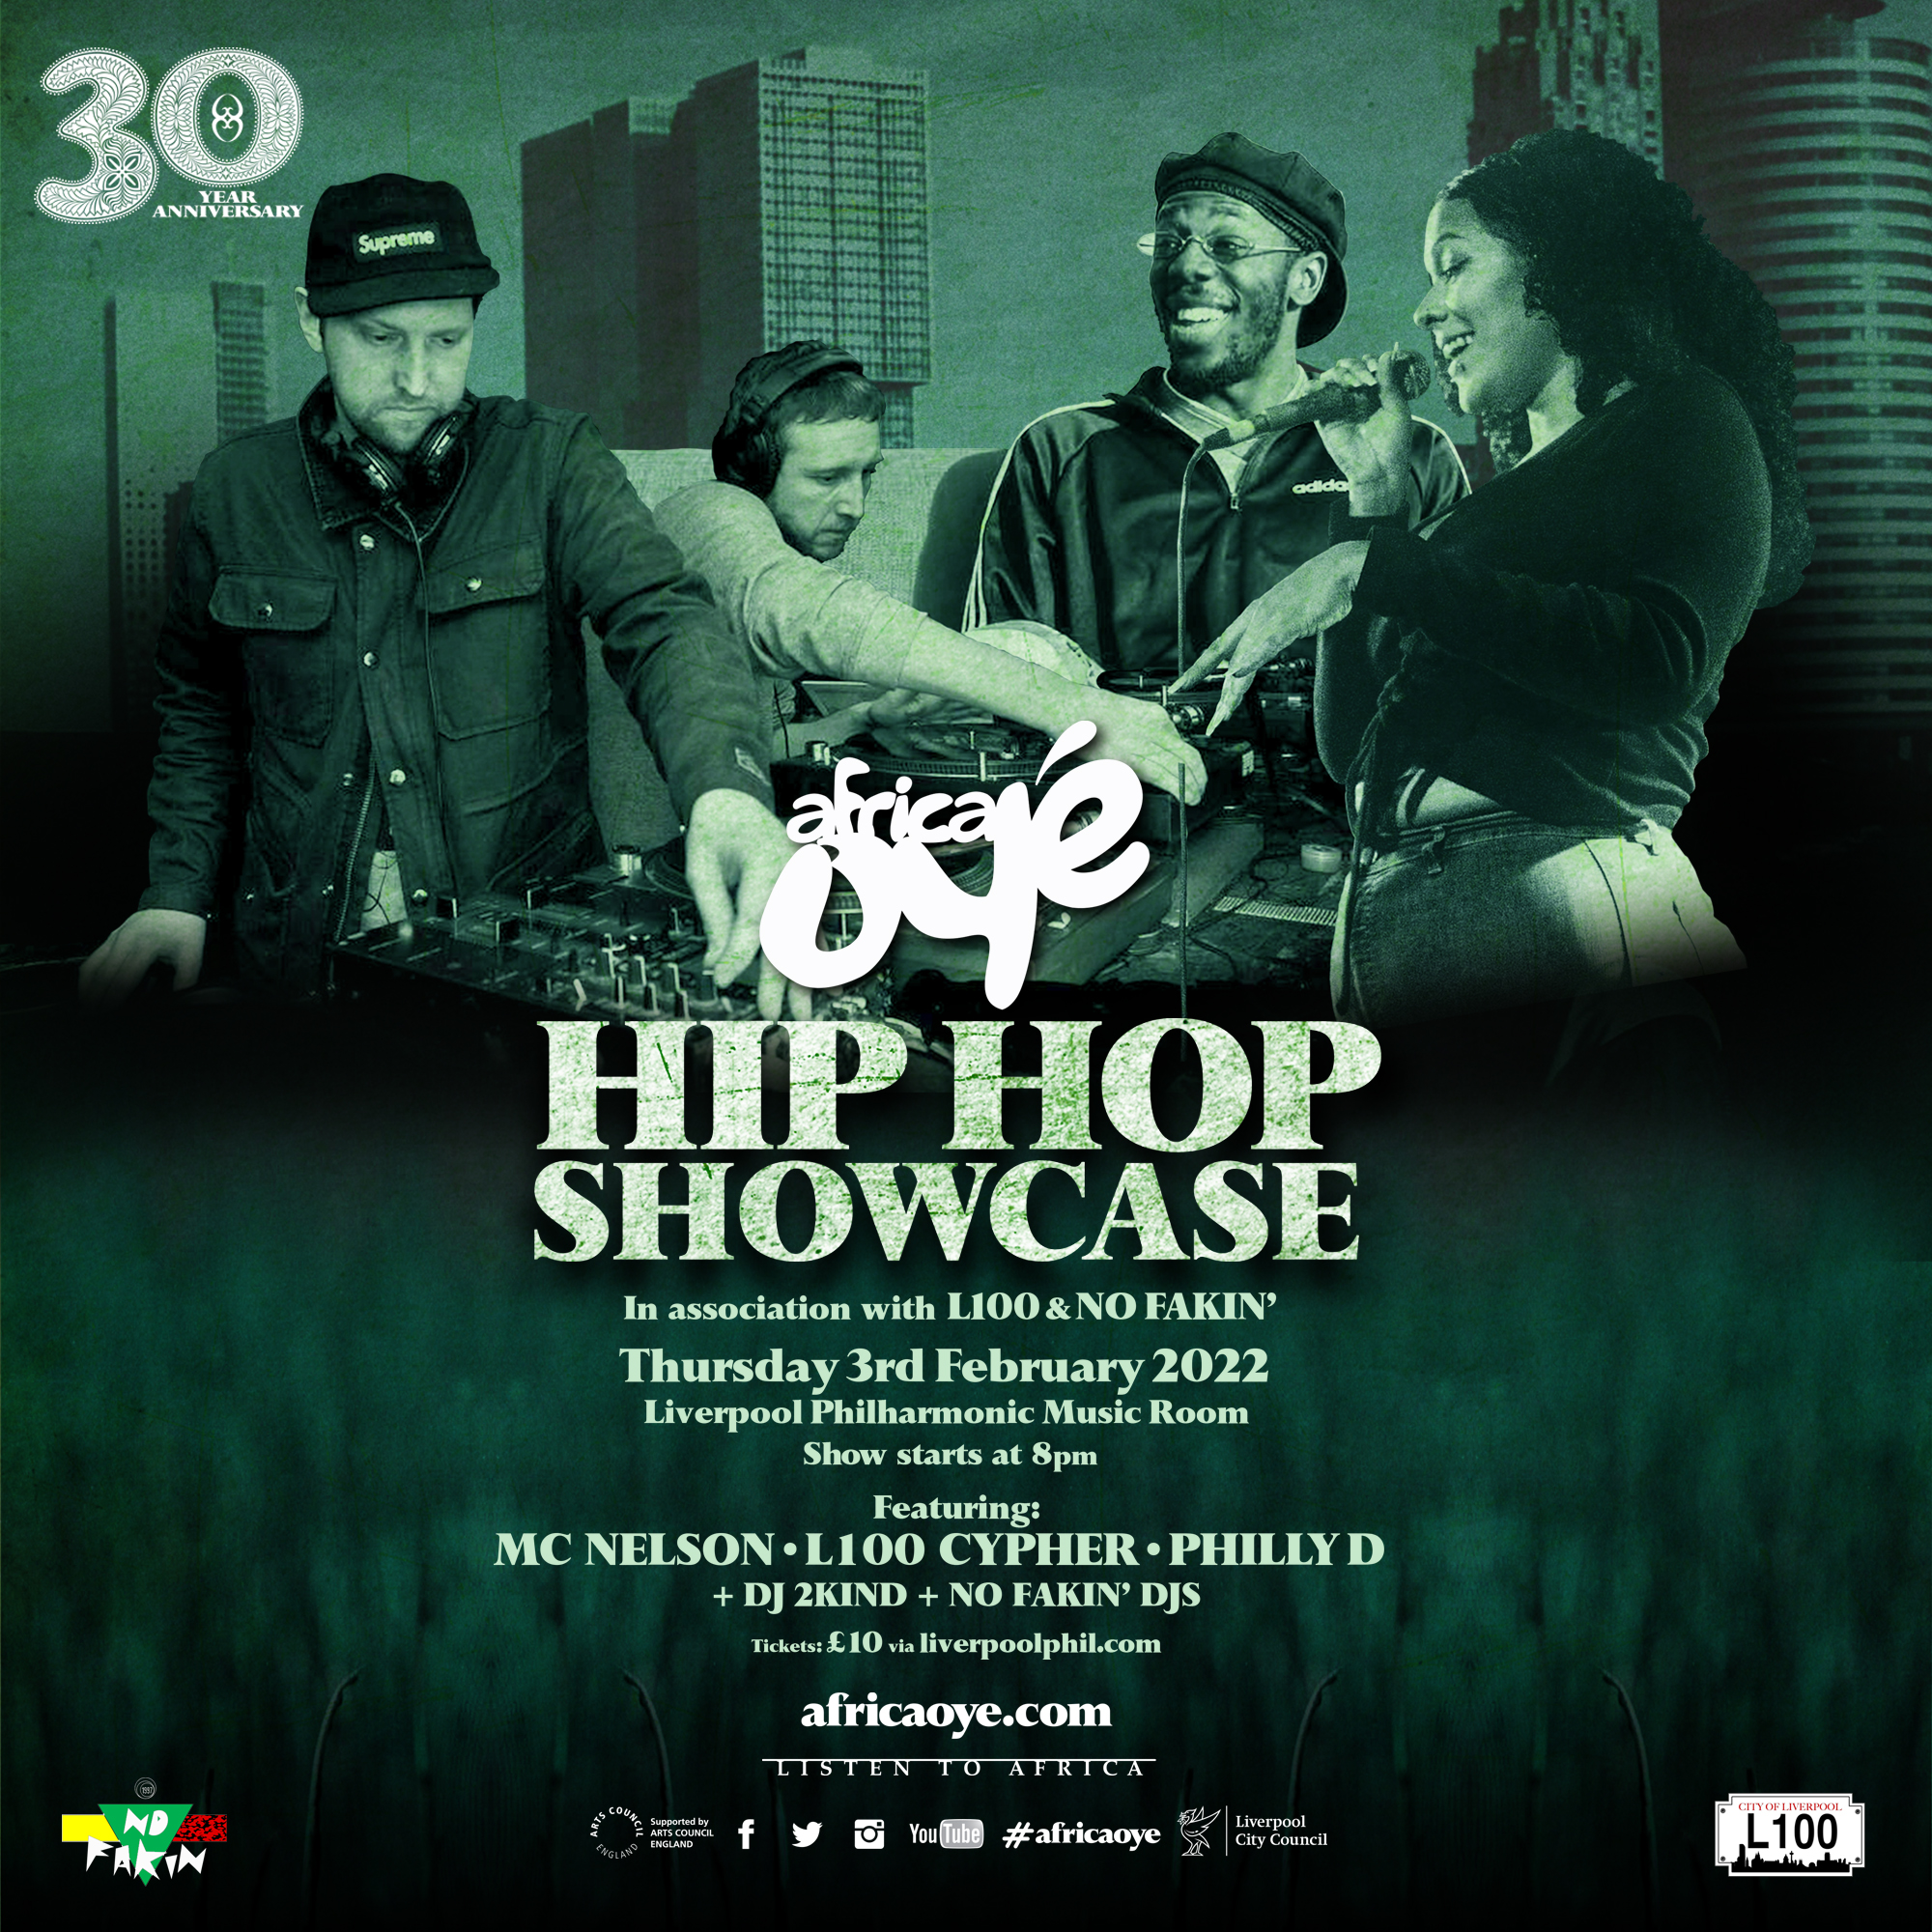 Promo image for the Africa Oyé Hip Hop Showcase